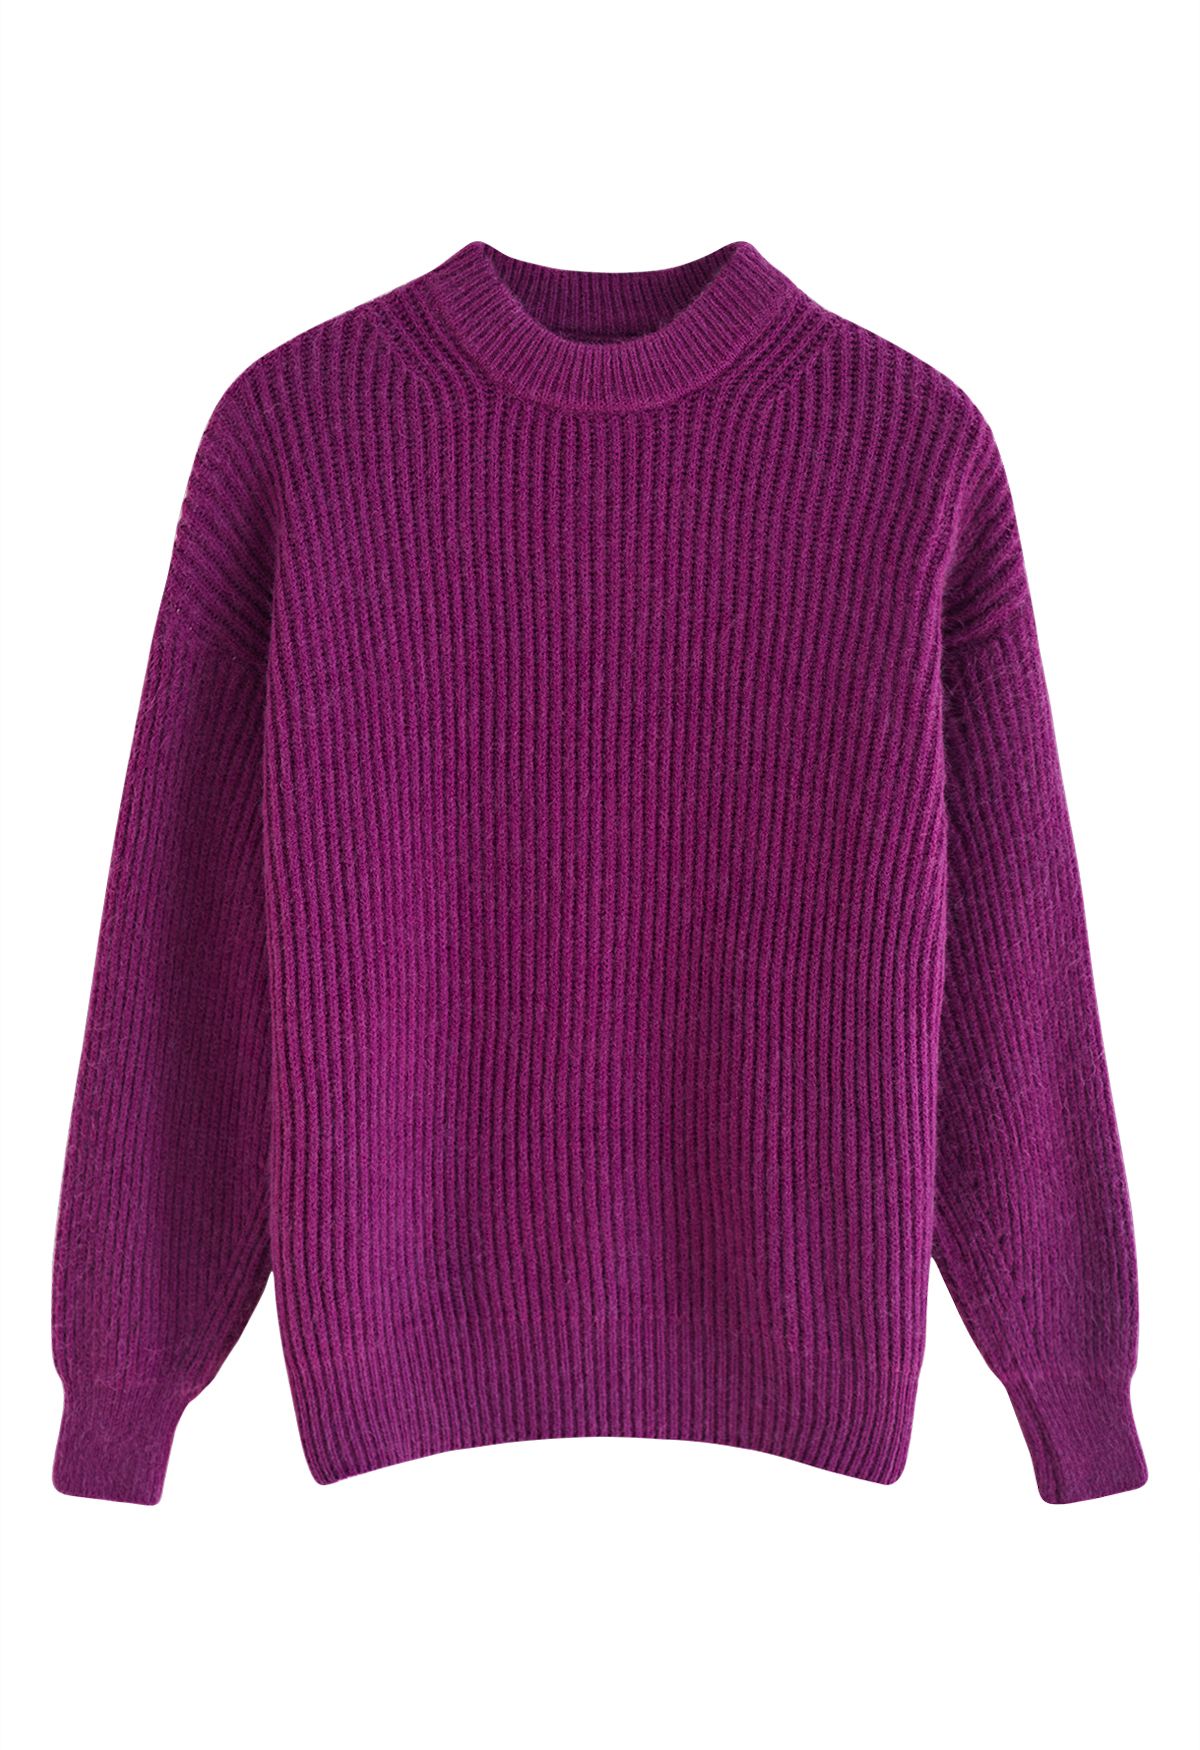 Solid Color Rib Knit Sweater in Purple - Retro, Indie and Unique Fashion